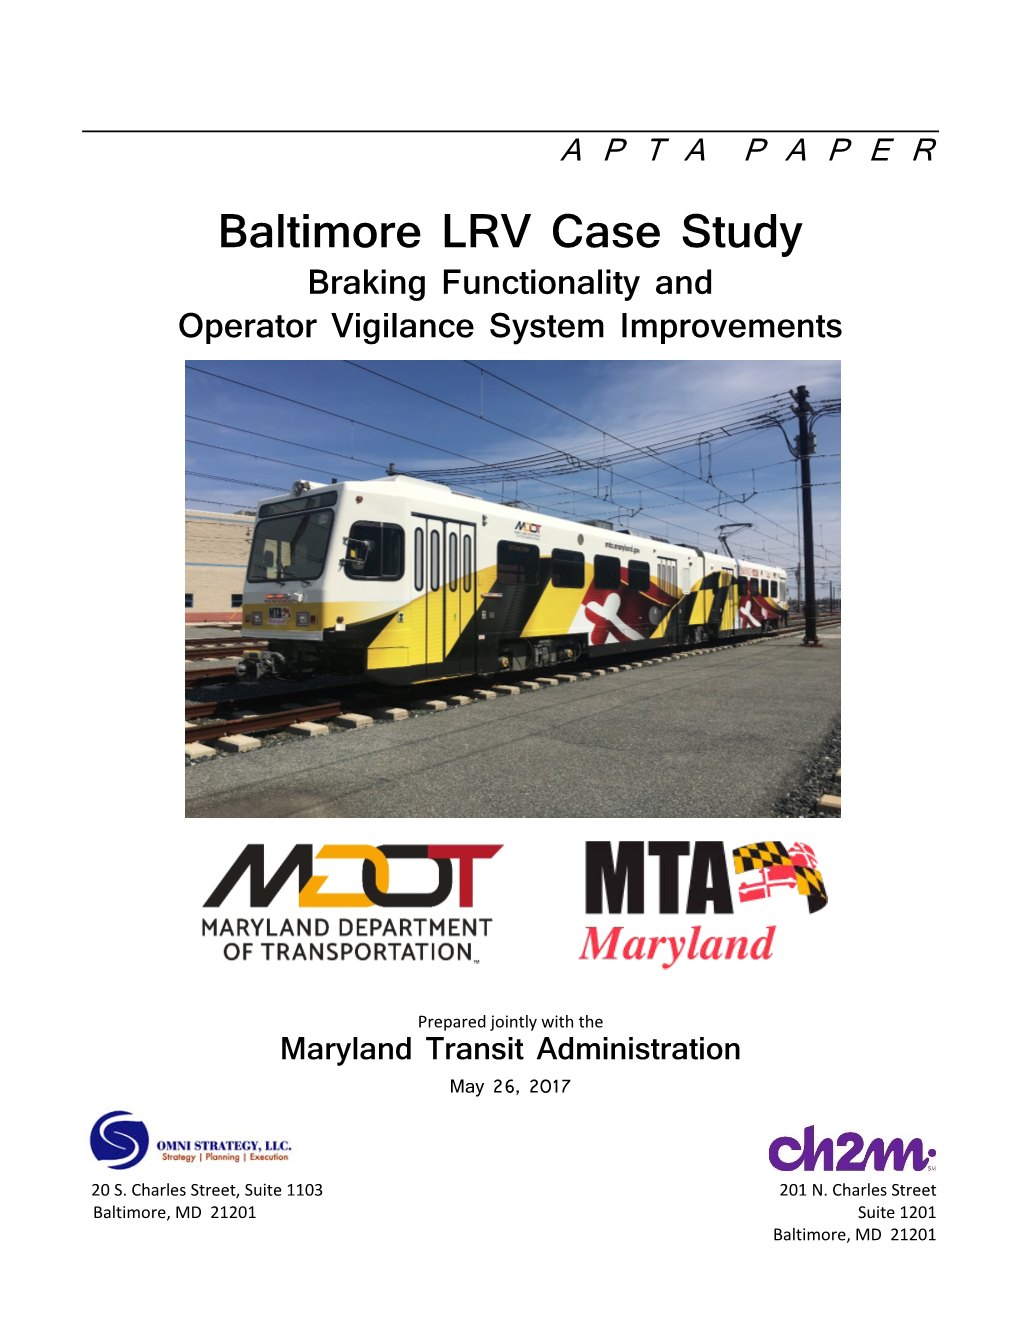 Baltimore LRV Case Study Braking Functionality and Operator Vigilance System Improvements